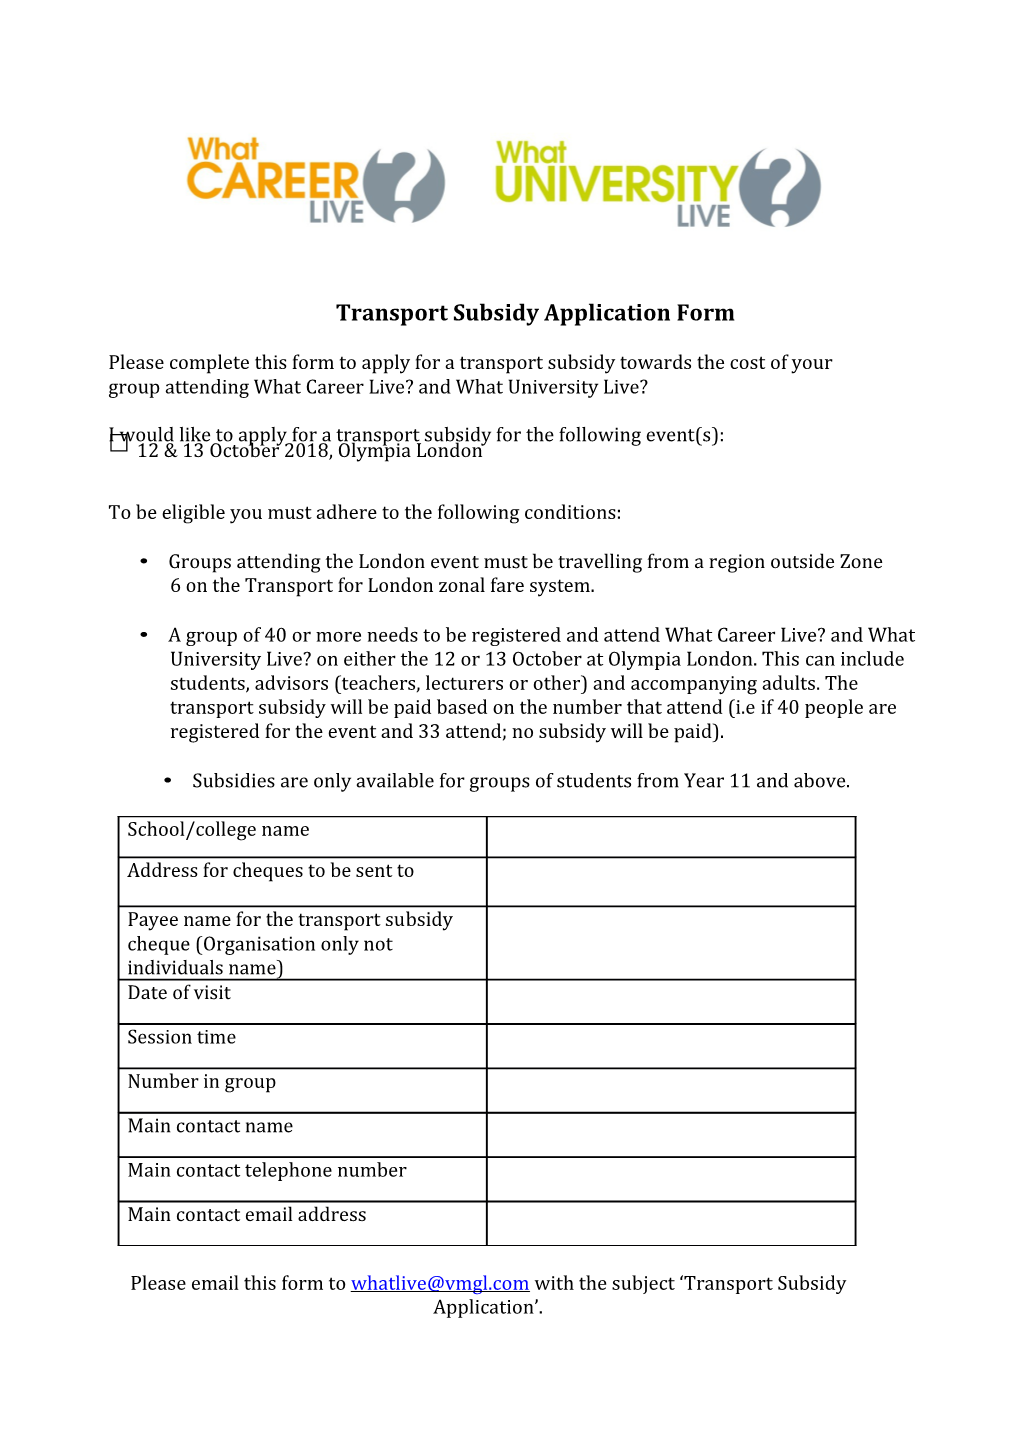 Transport Subsidy Application Form